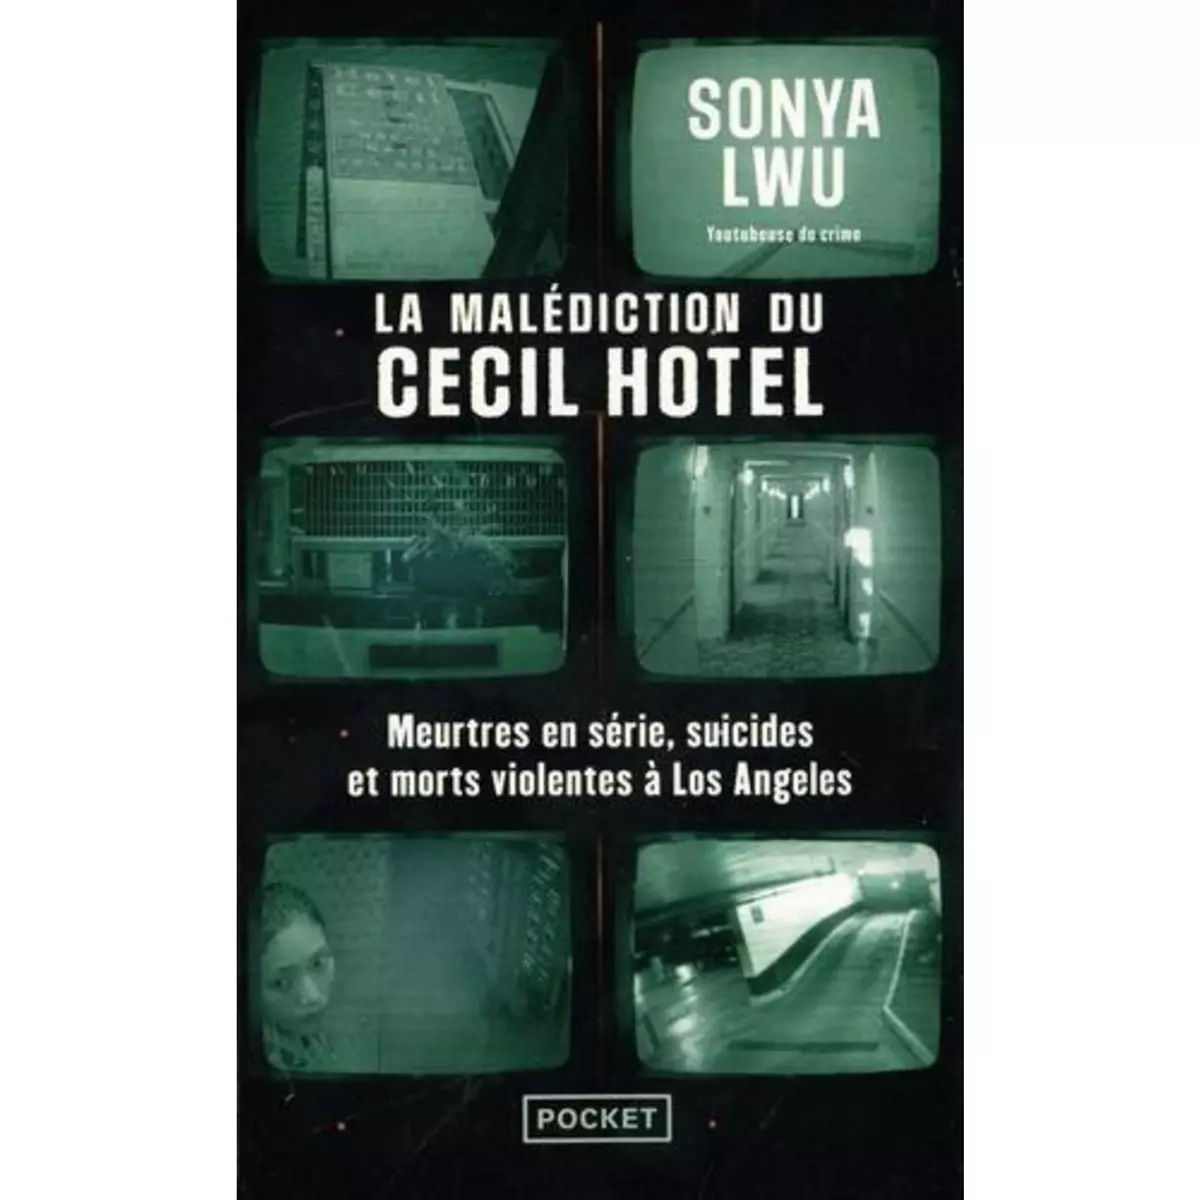  LA MALEDICTION DU CECIL HOTEL. MEURTRES EN SERIE, SUICIDES ET MORTS VIOLENTES A LOS ANGELES, Lwu Sonya